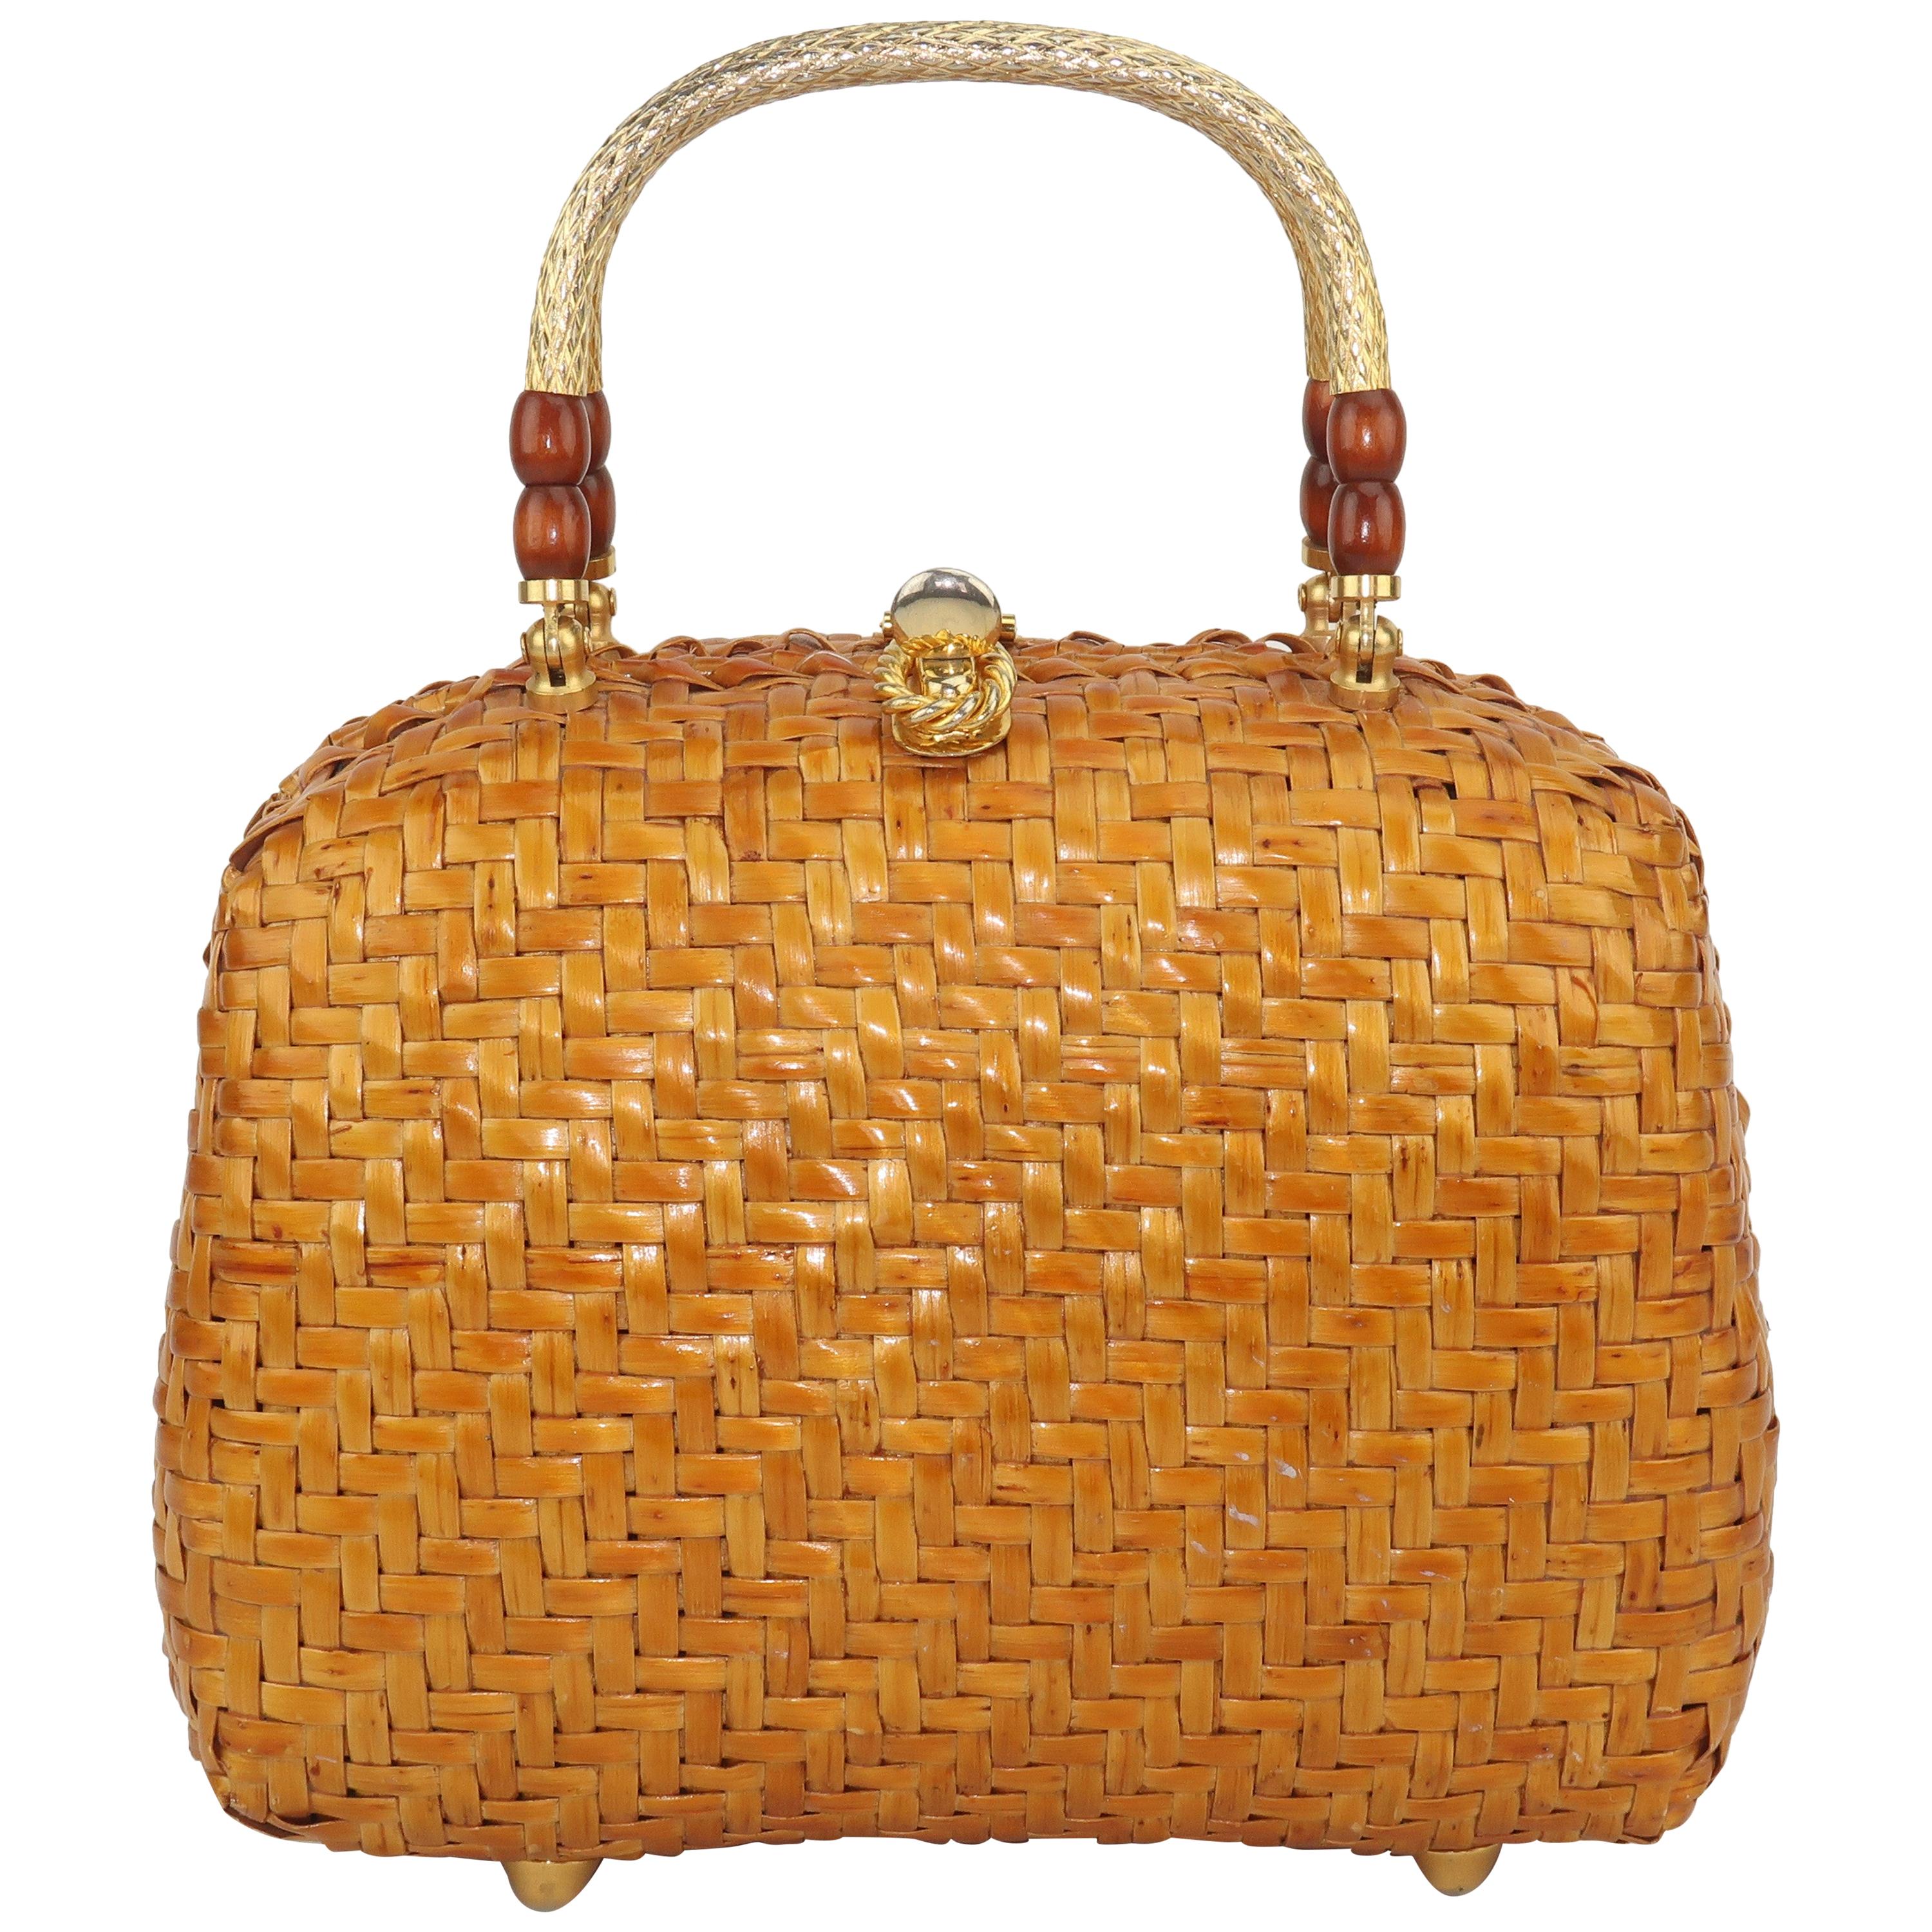 Vintage Straw Handbag With Gold Handles